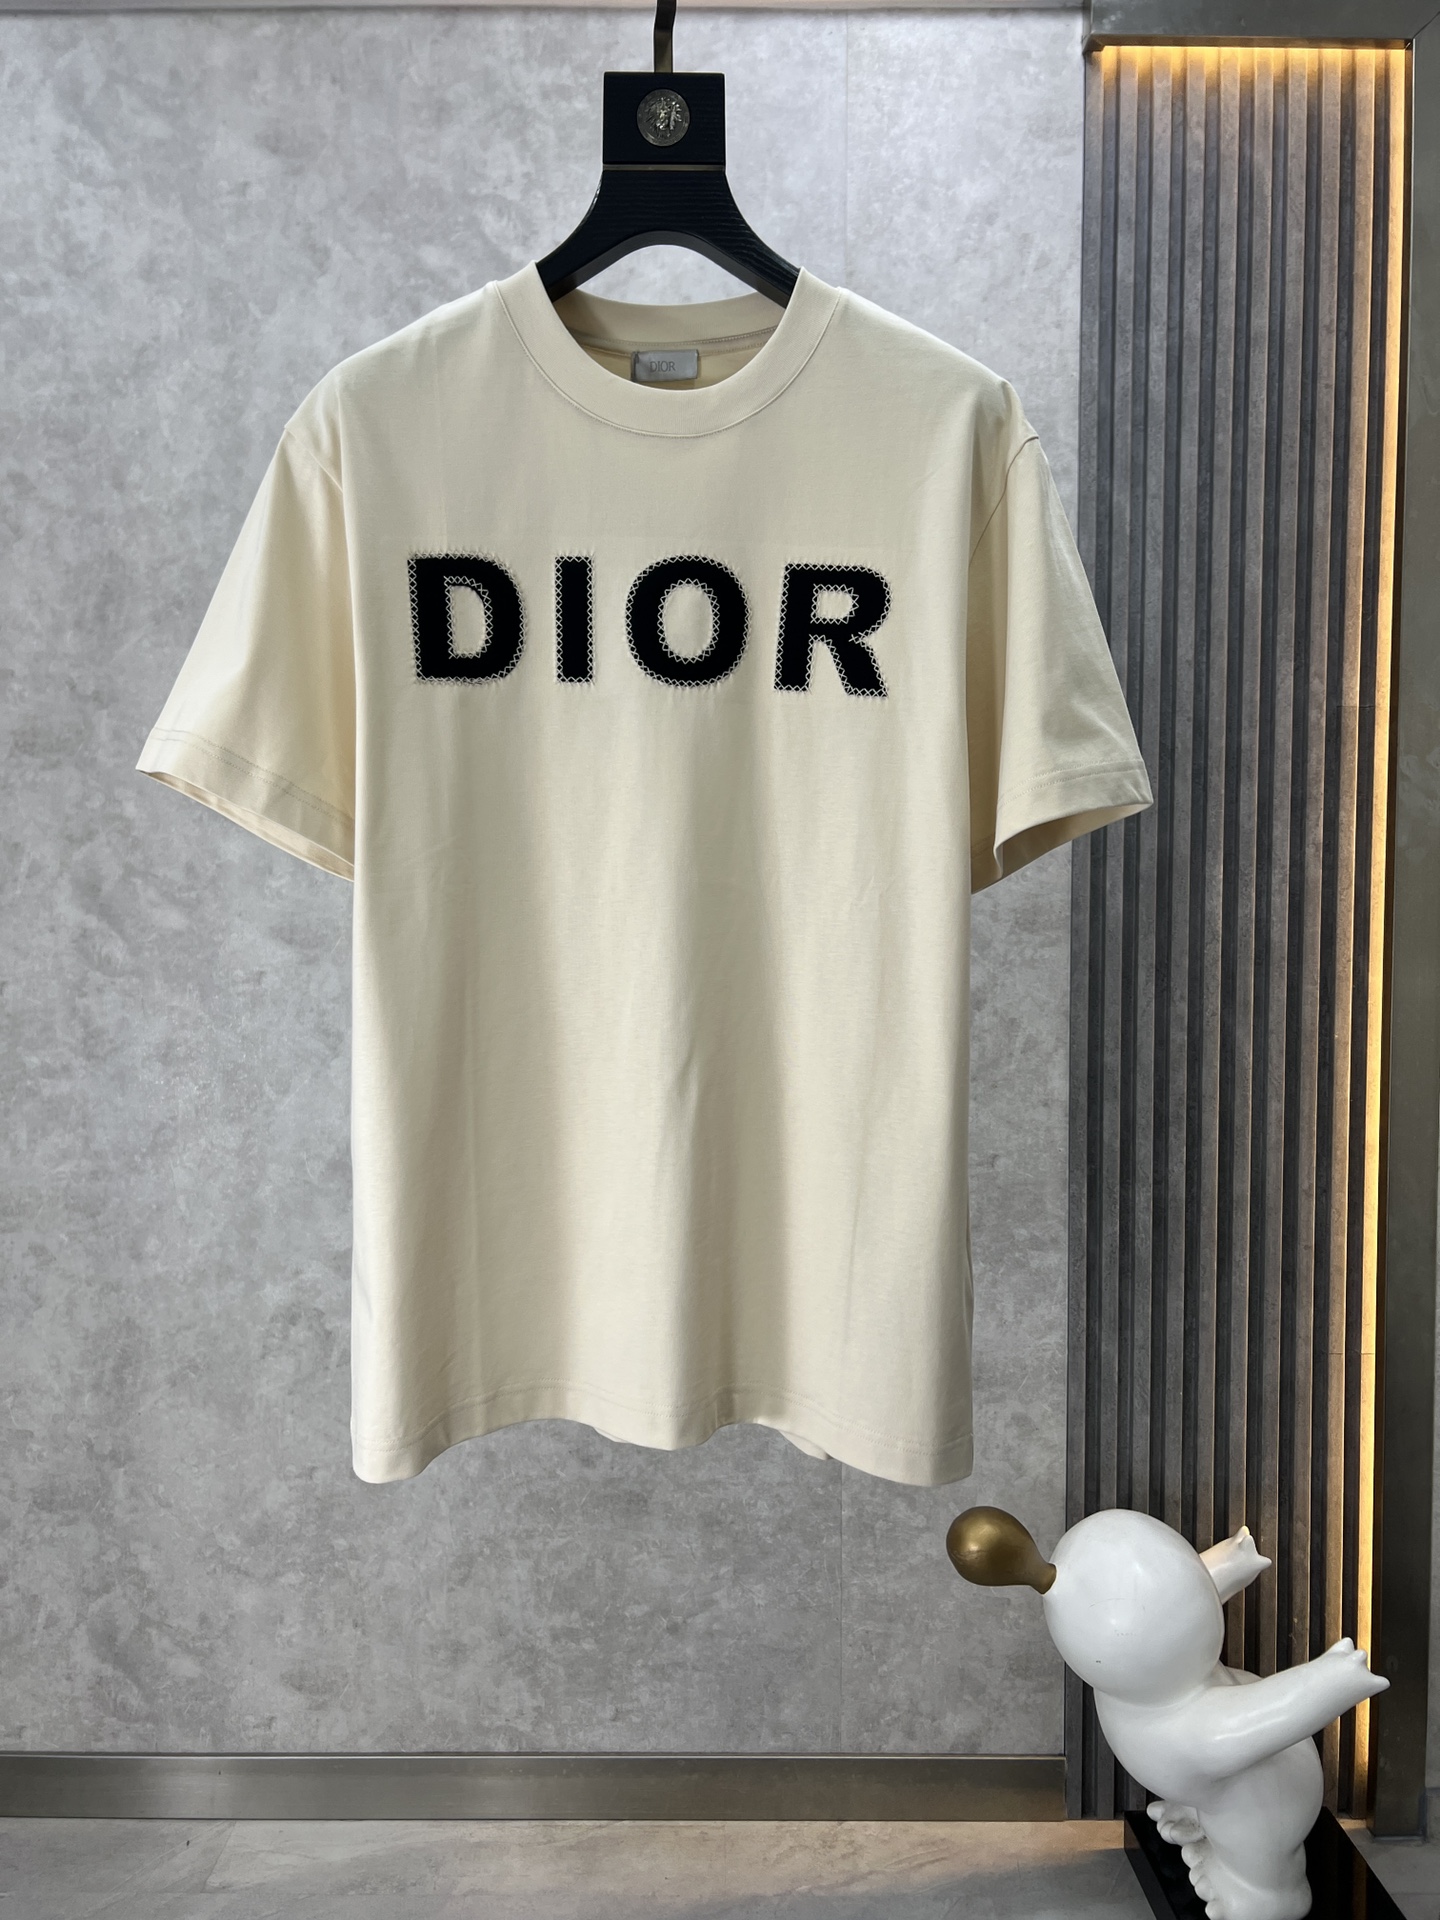 Dior Clothing T-Shirt Black Khaki White Unisex Cotton Spring/Summer Collection Short Sleeve